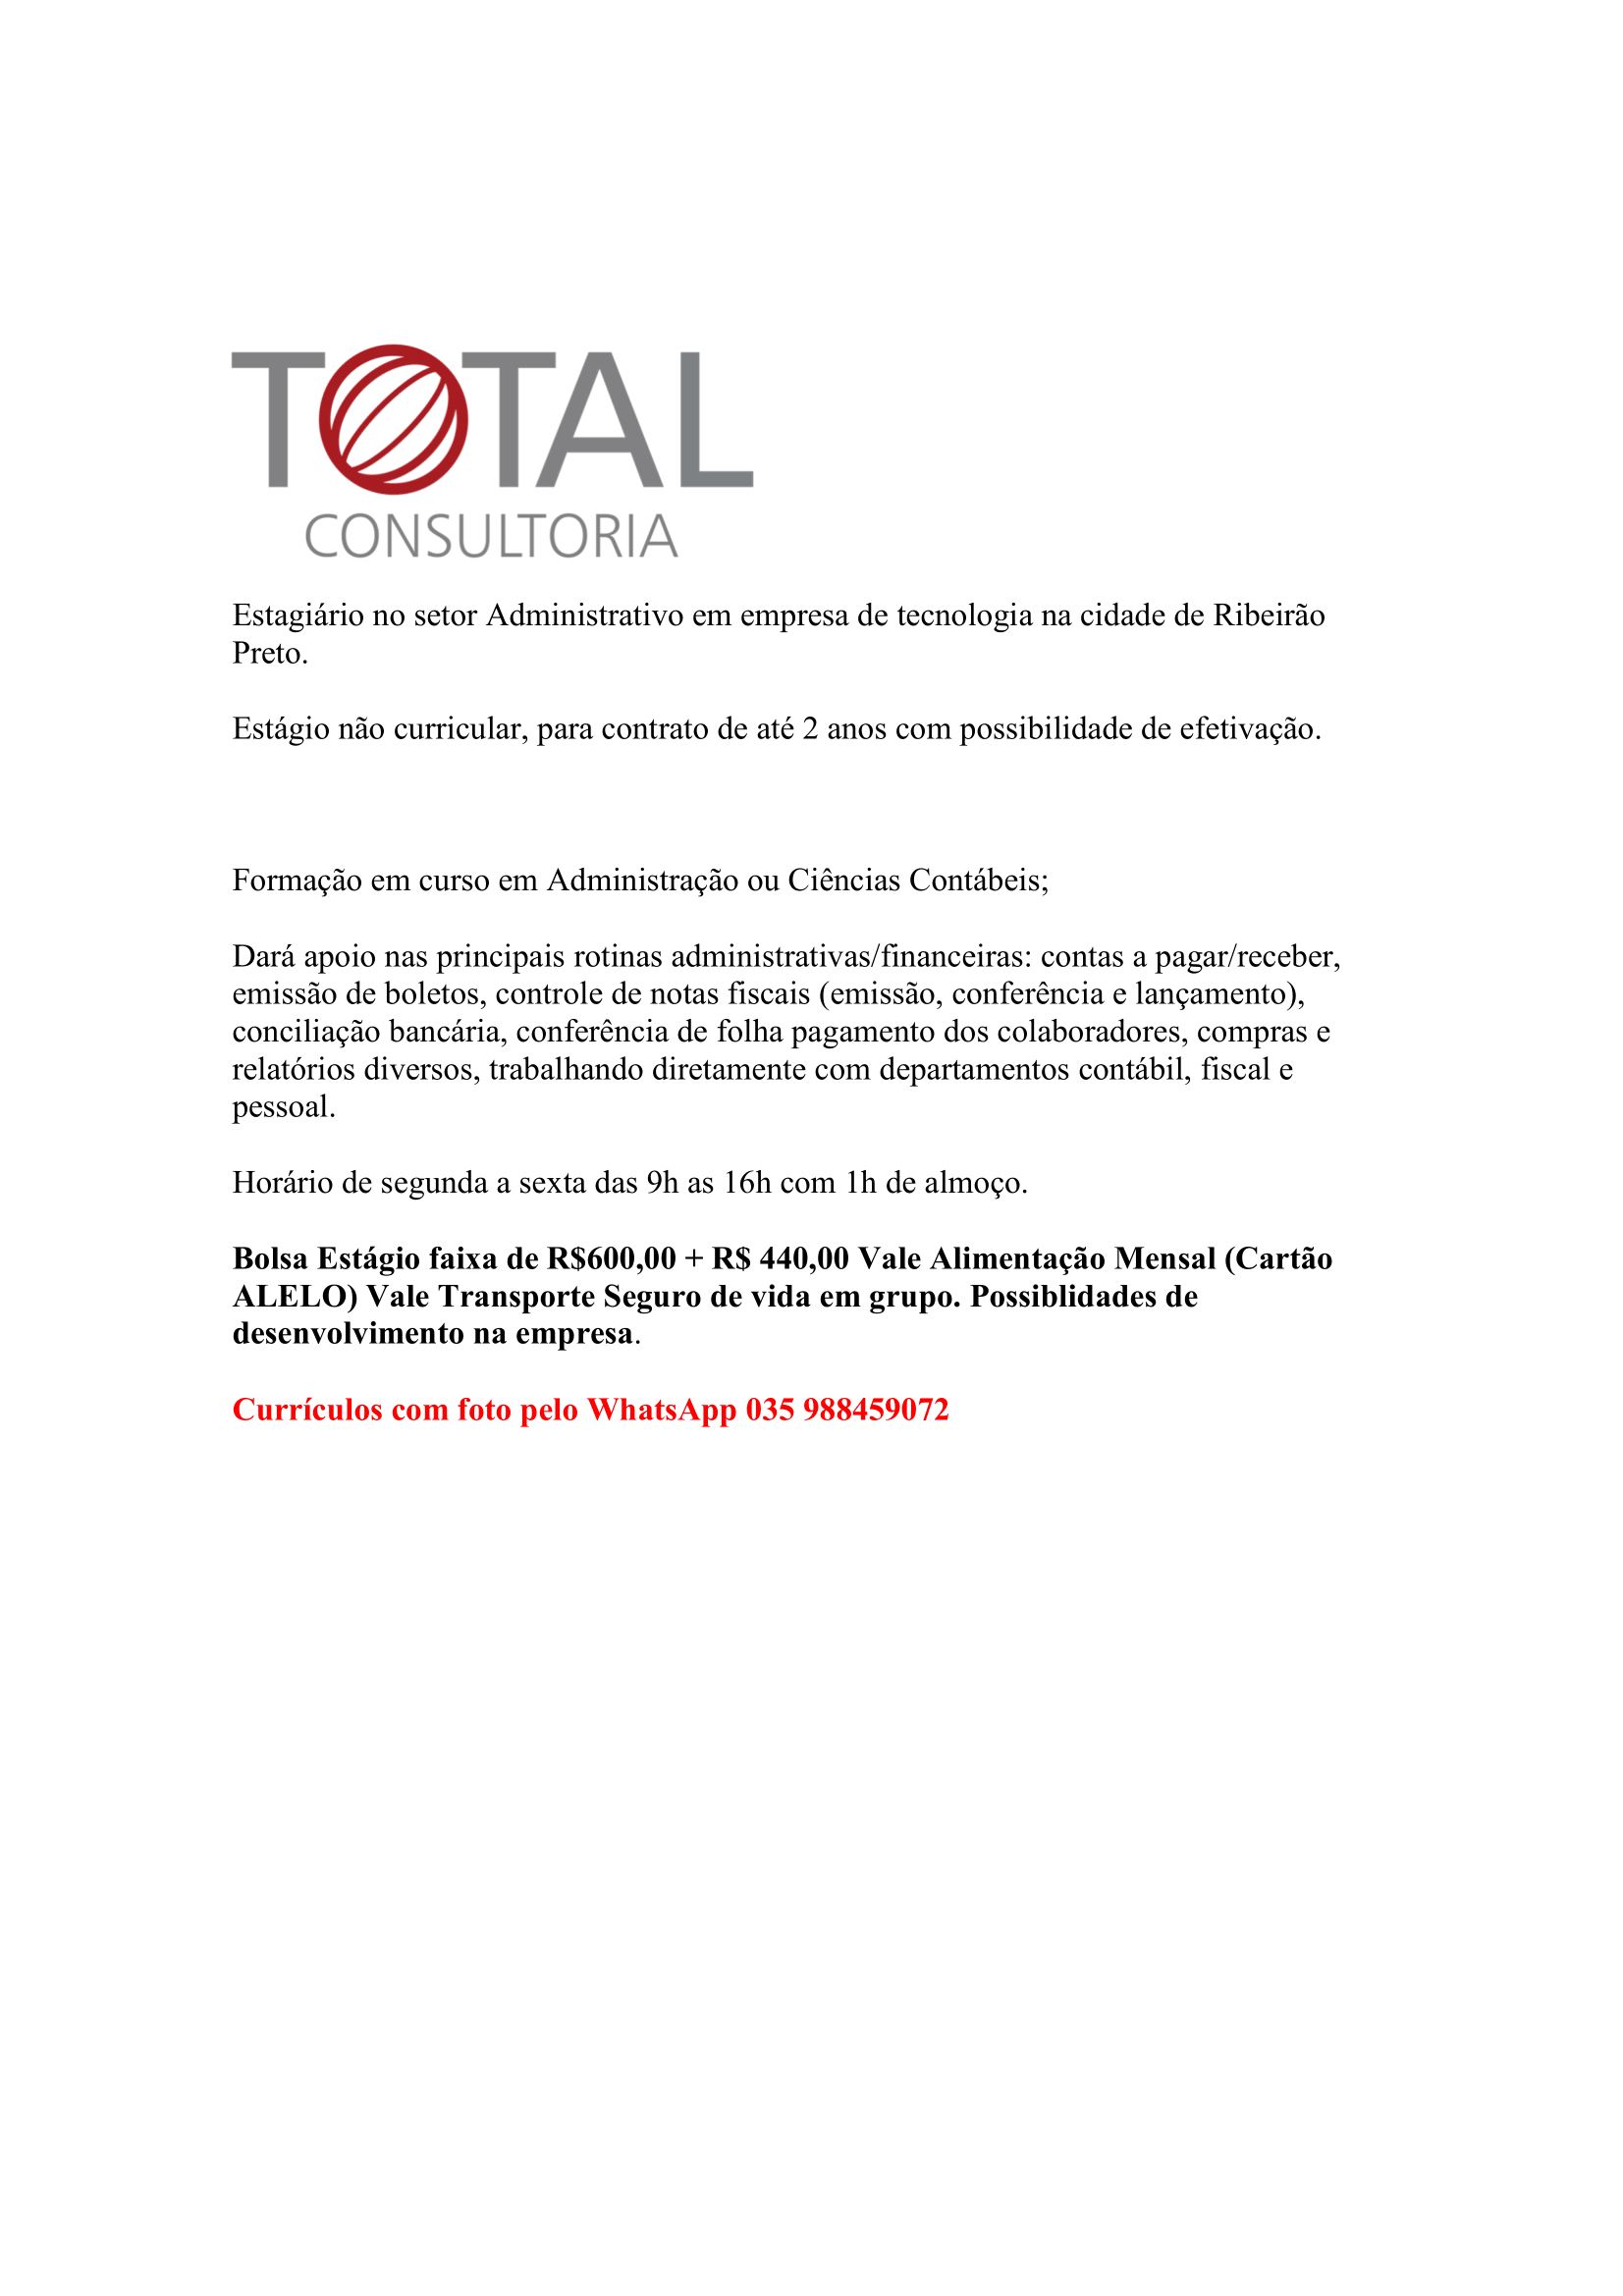 Total_consultoria-1.png